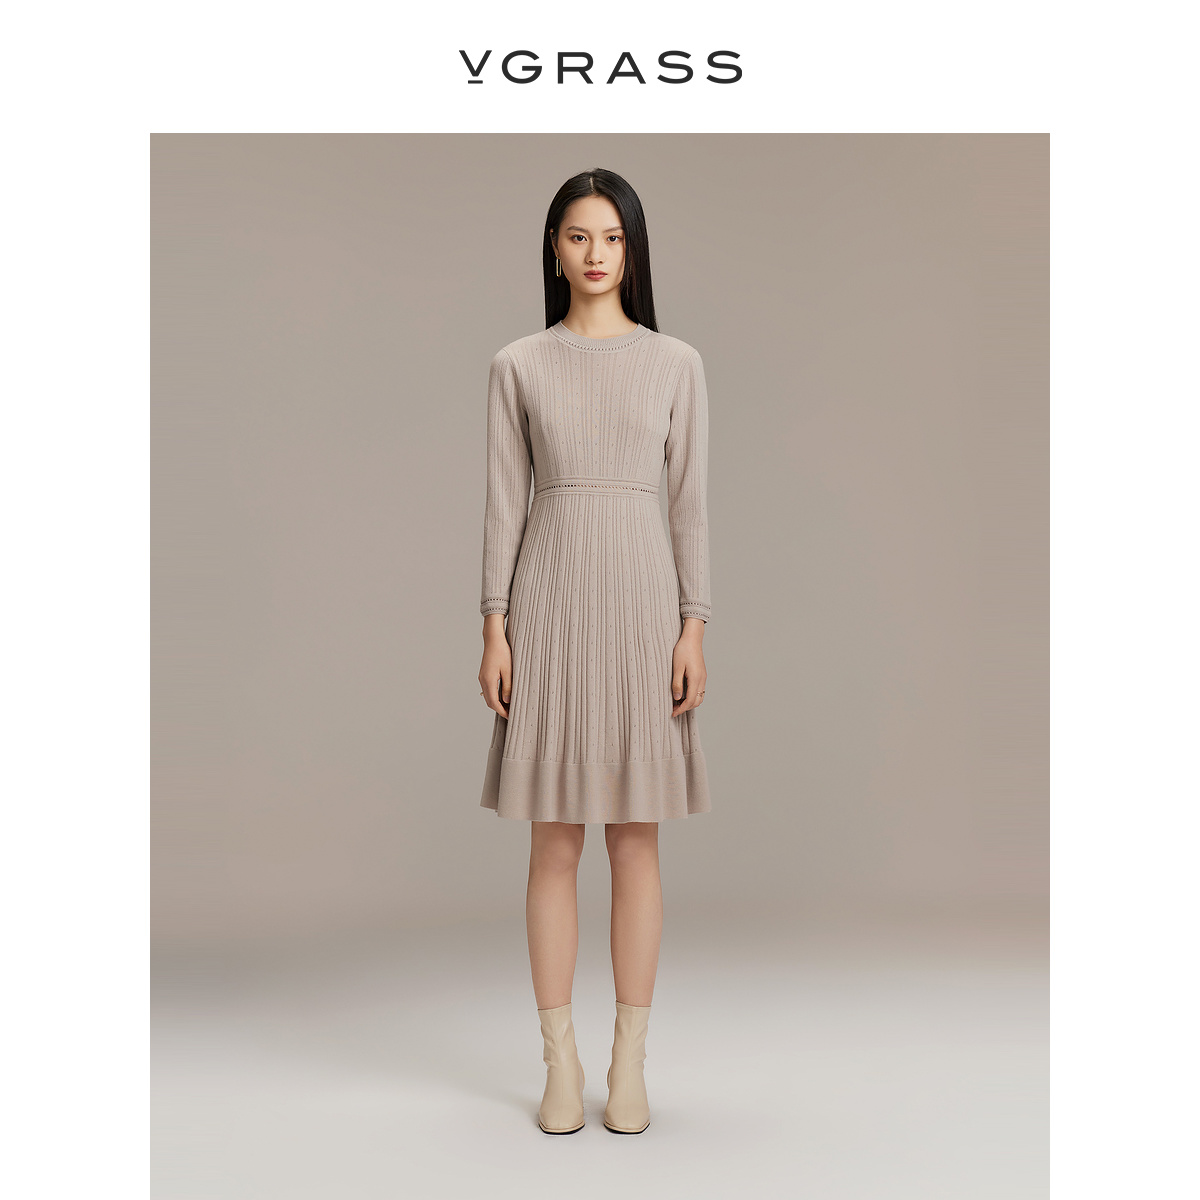 VGRASS原色针织羊毛连衣裙冬季新款气质收腰显瘦针织裙VZL3N42560